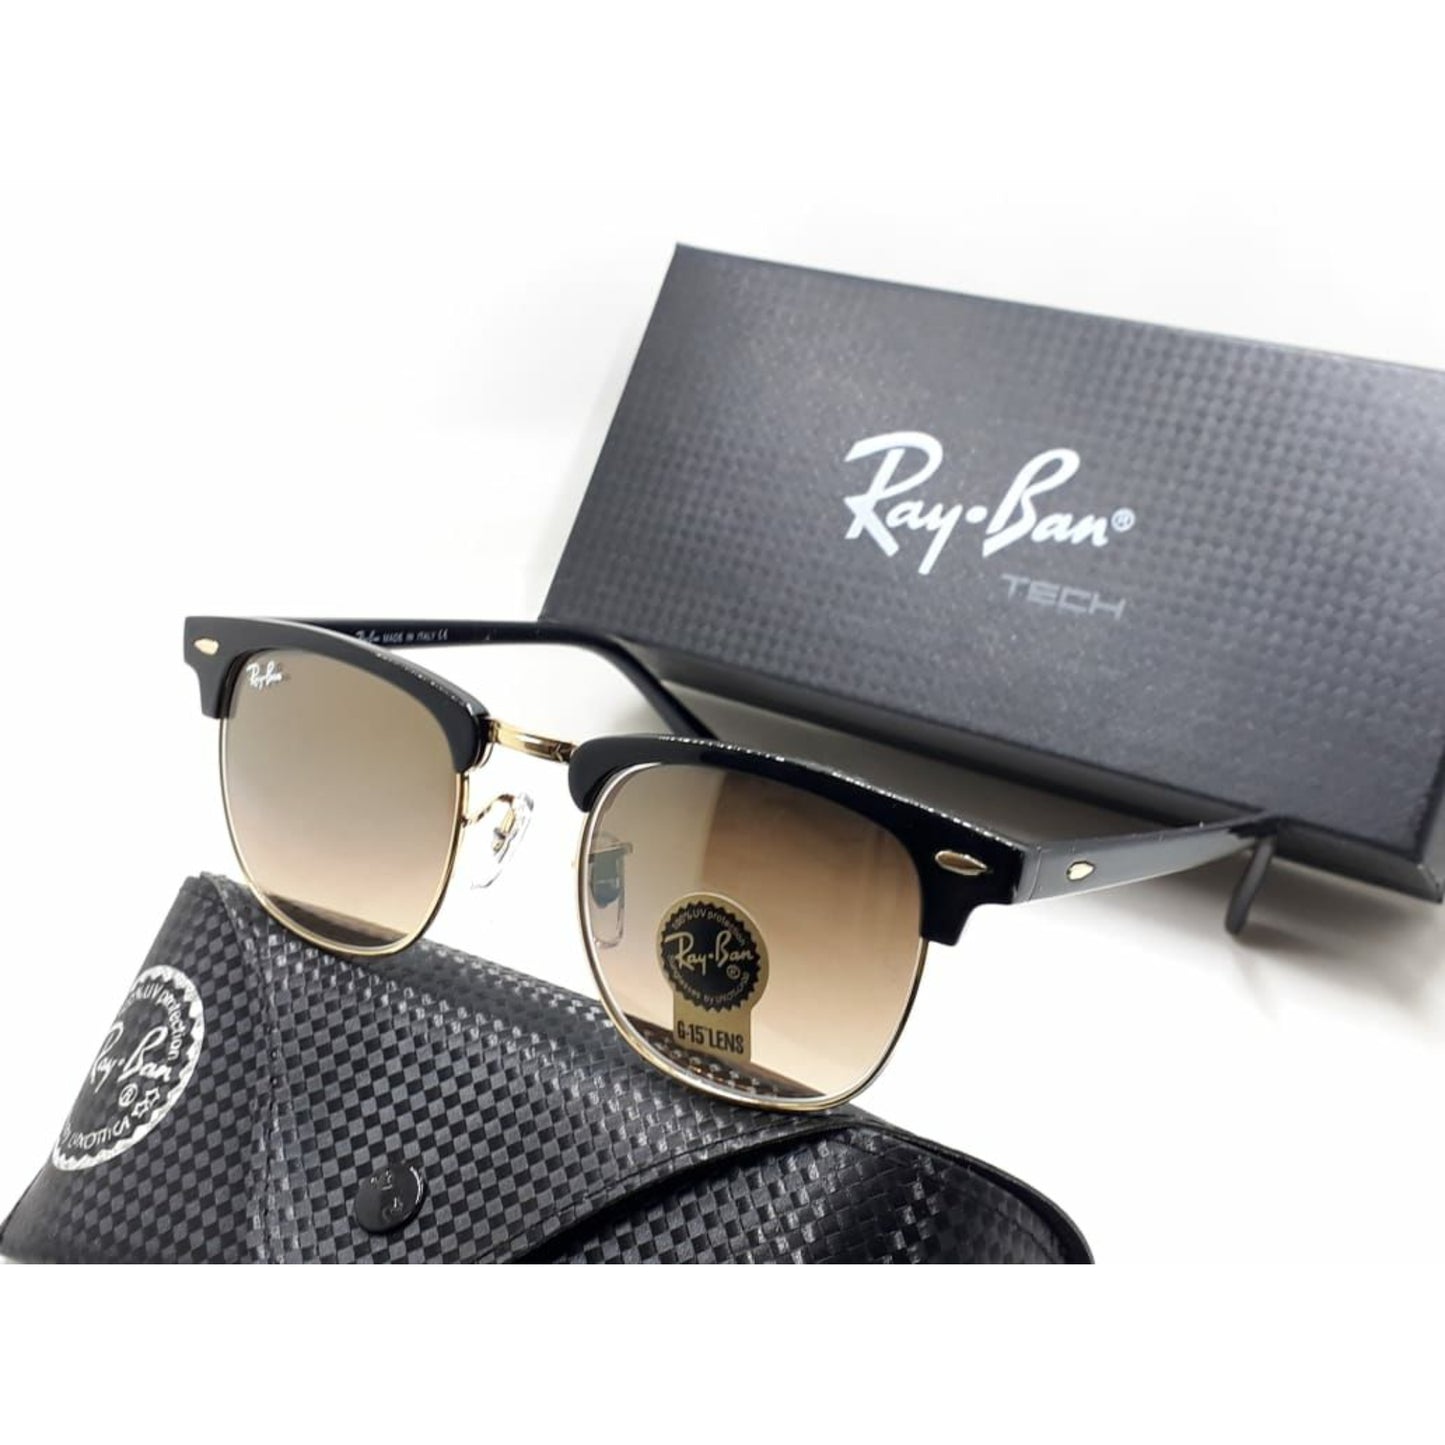 Buy New Stylish Men Women A1+ Quality Latest Designer Hot Favorite Club Special Vintage Sunglasses ( RB-3016 Club Master Sunglass )